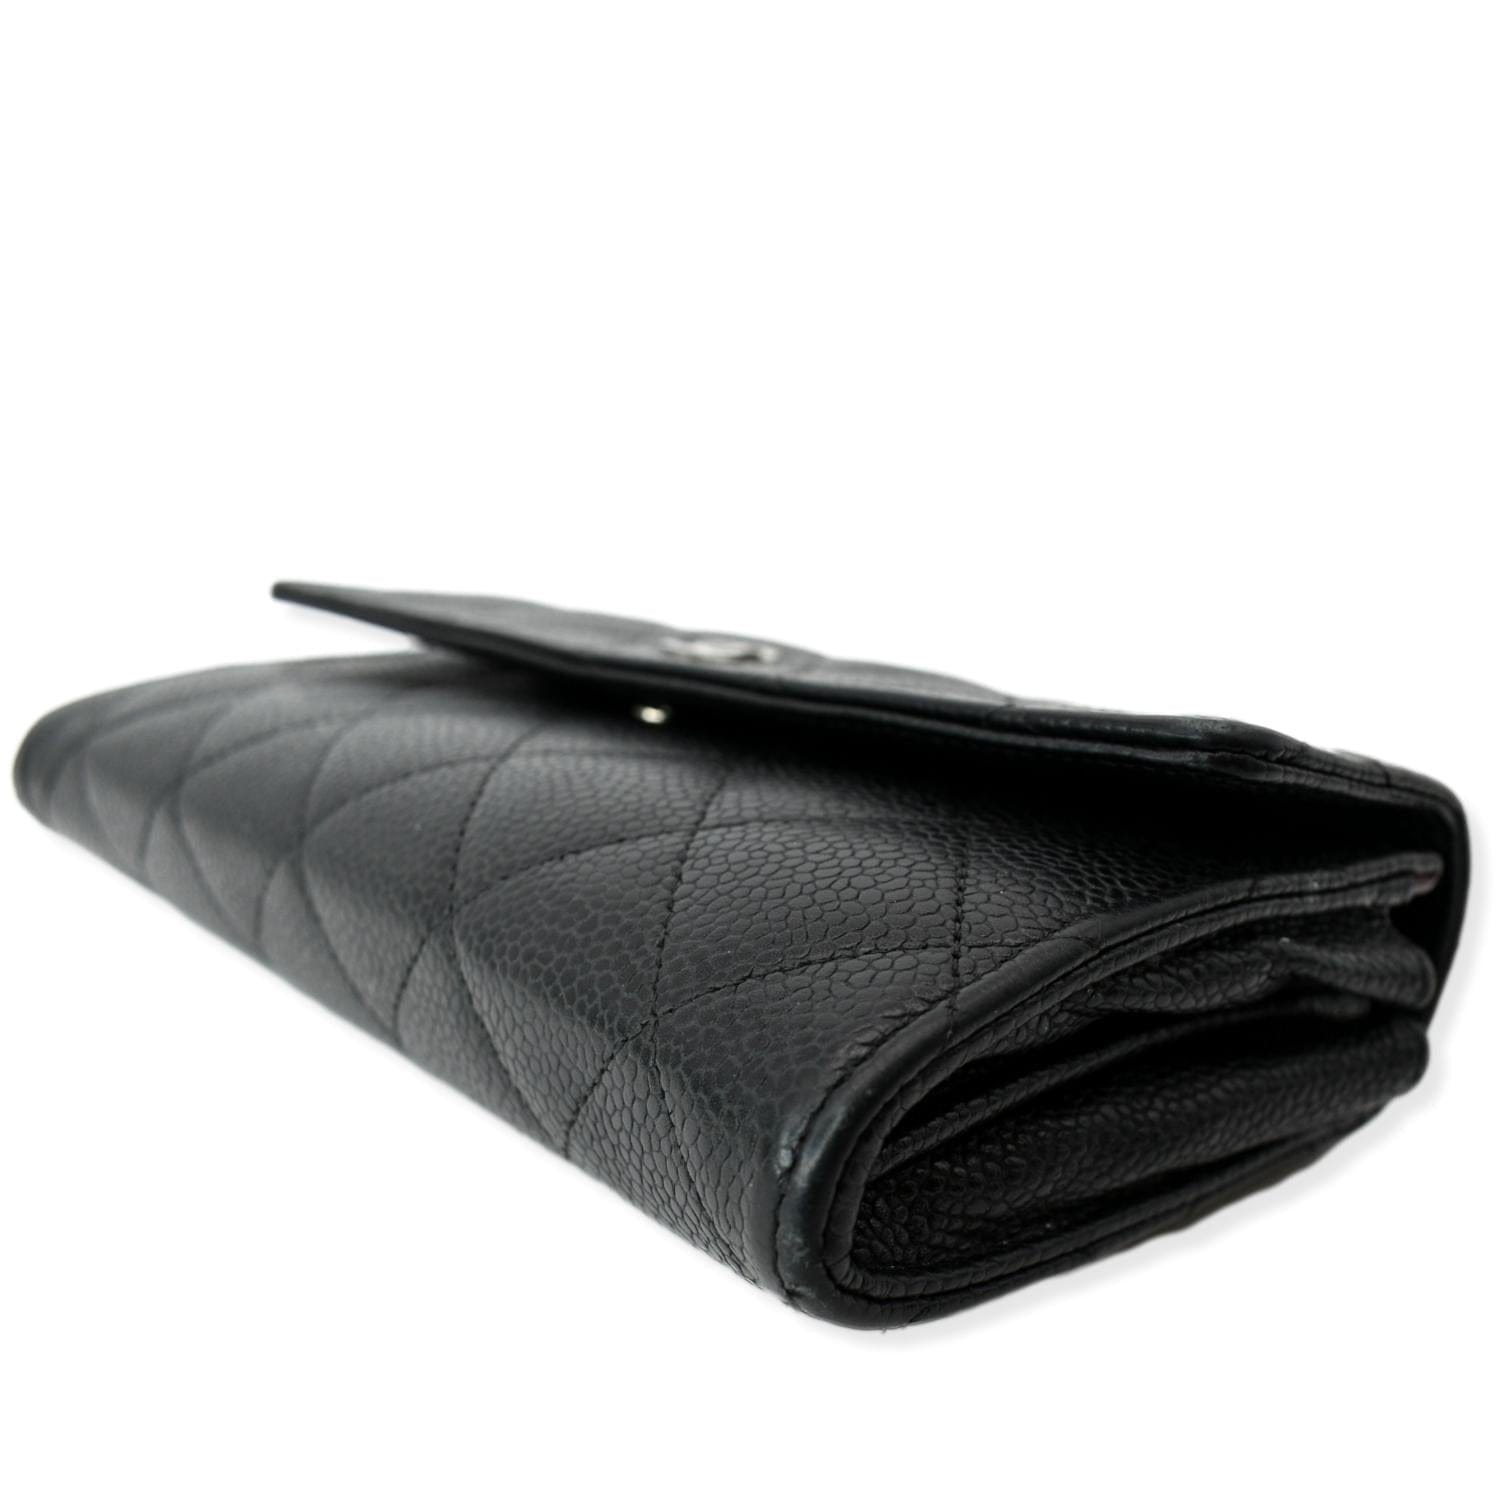 Chanel Classic Long Flap Leather Wallet Black - Shop Now